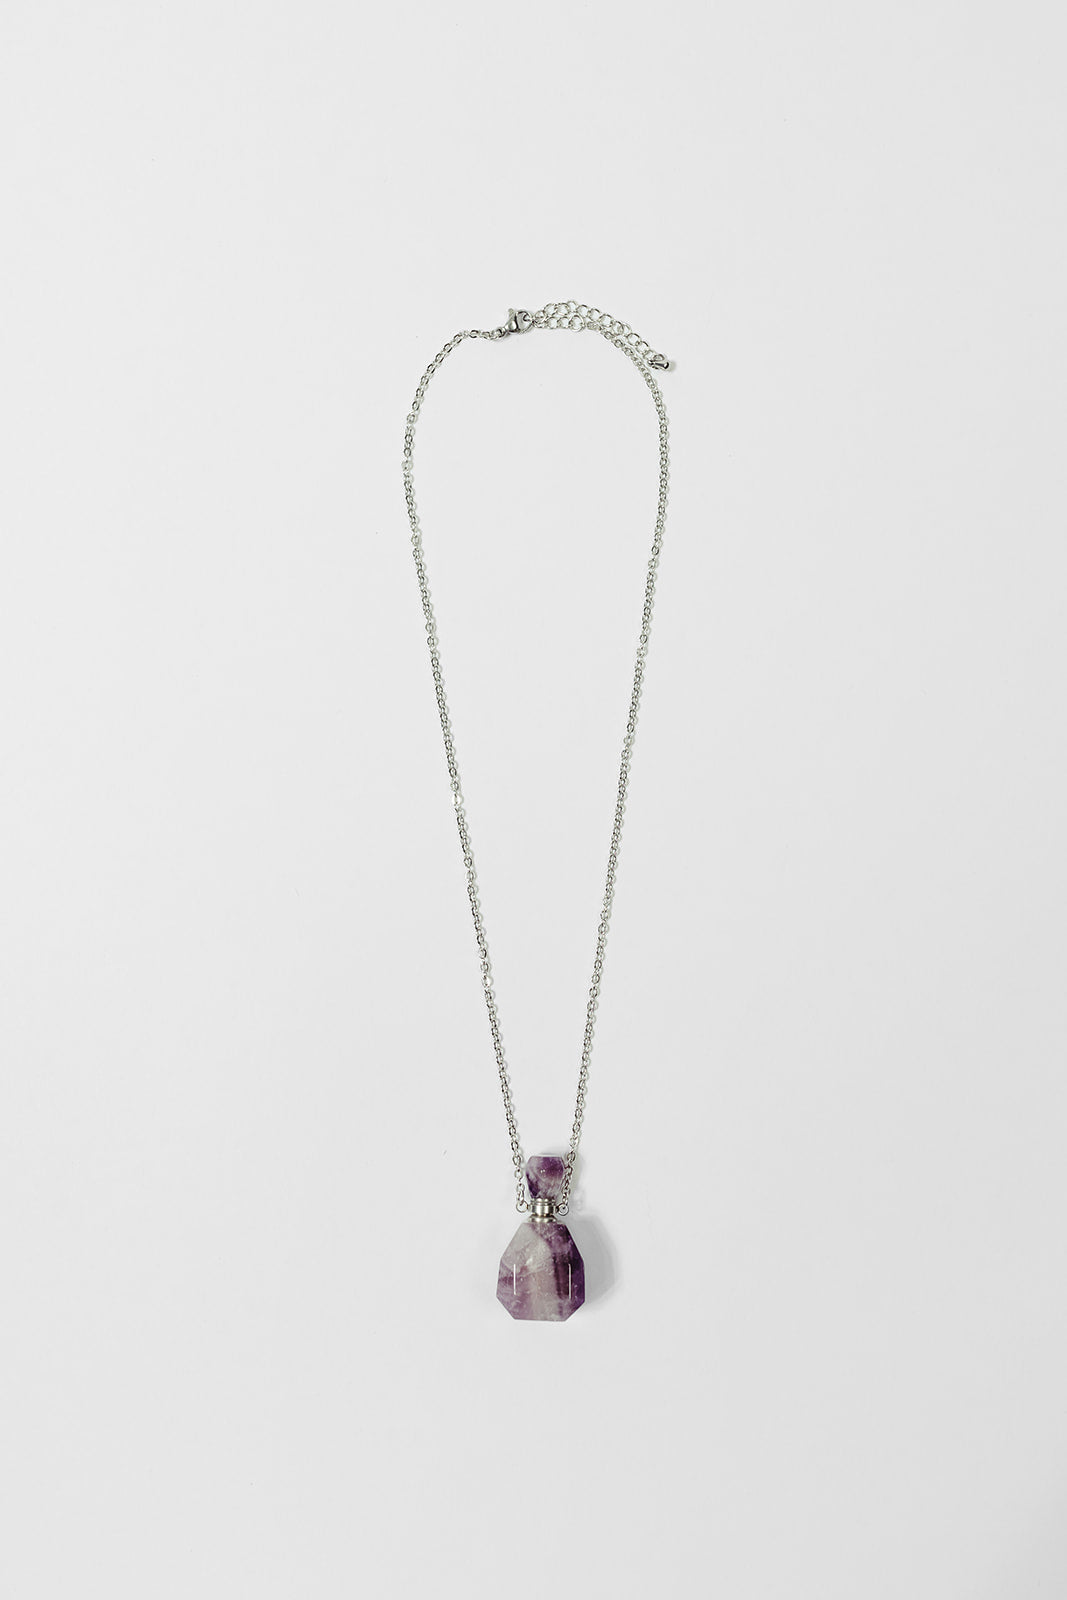 Enchanted Potion Bottle Necklace - Amethyst